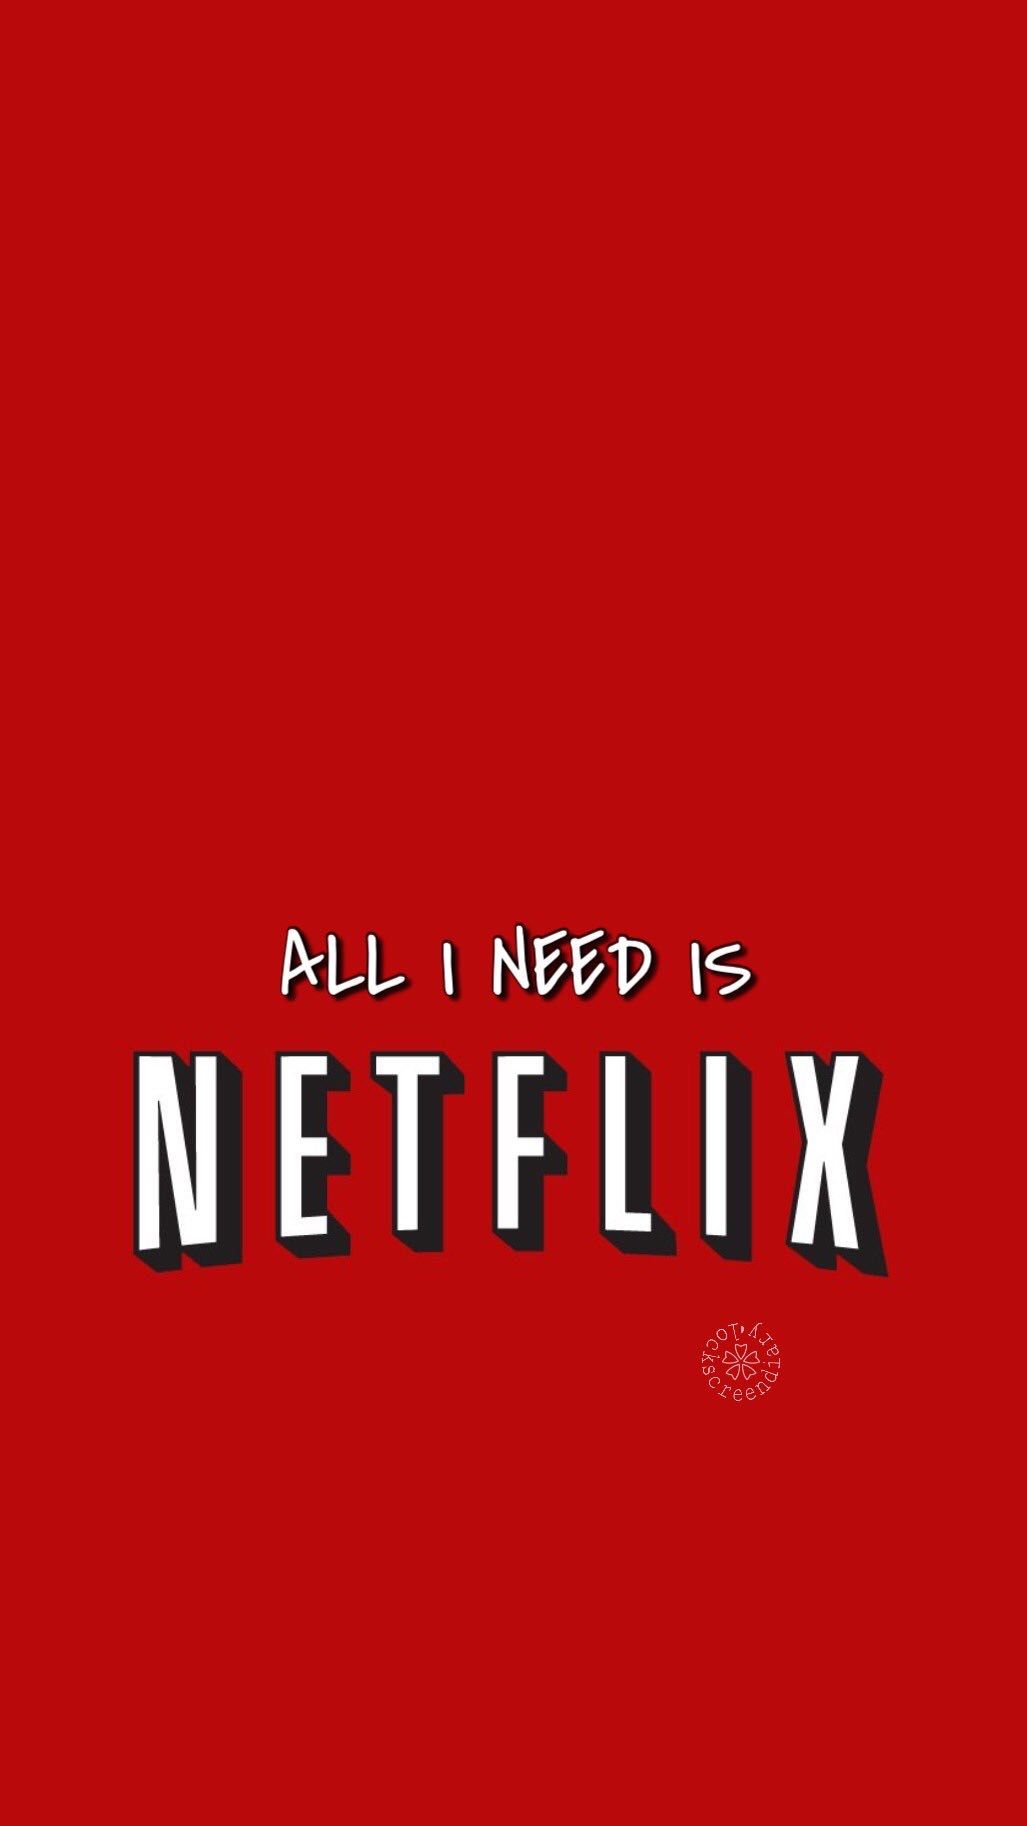 All I need is Netflix wallpaper - Netflix